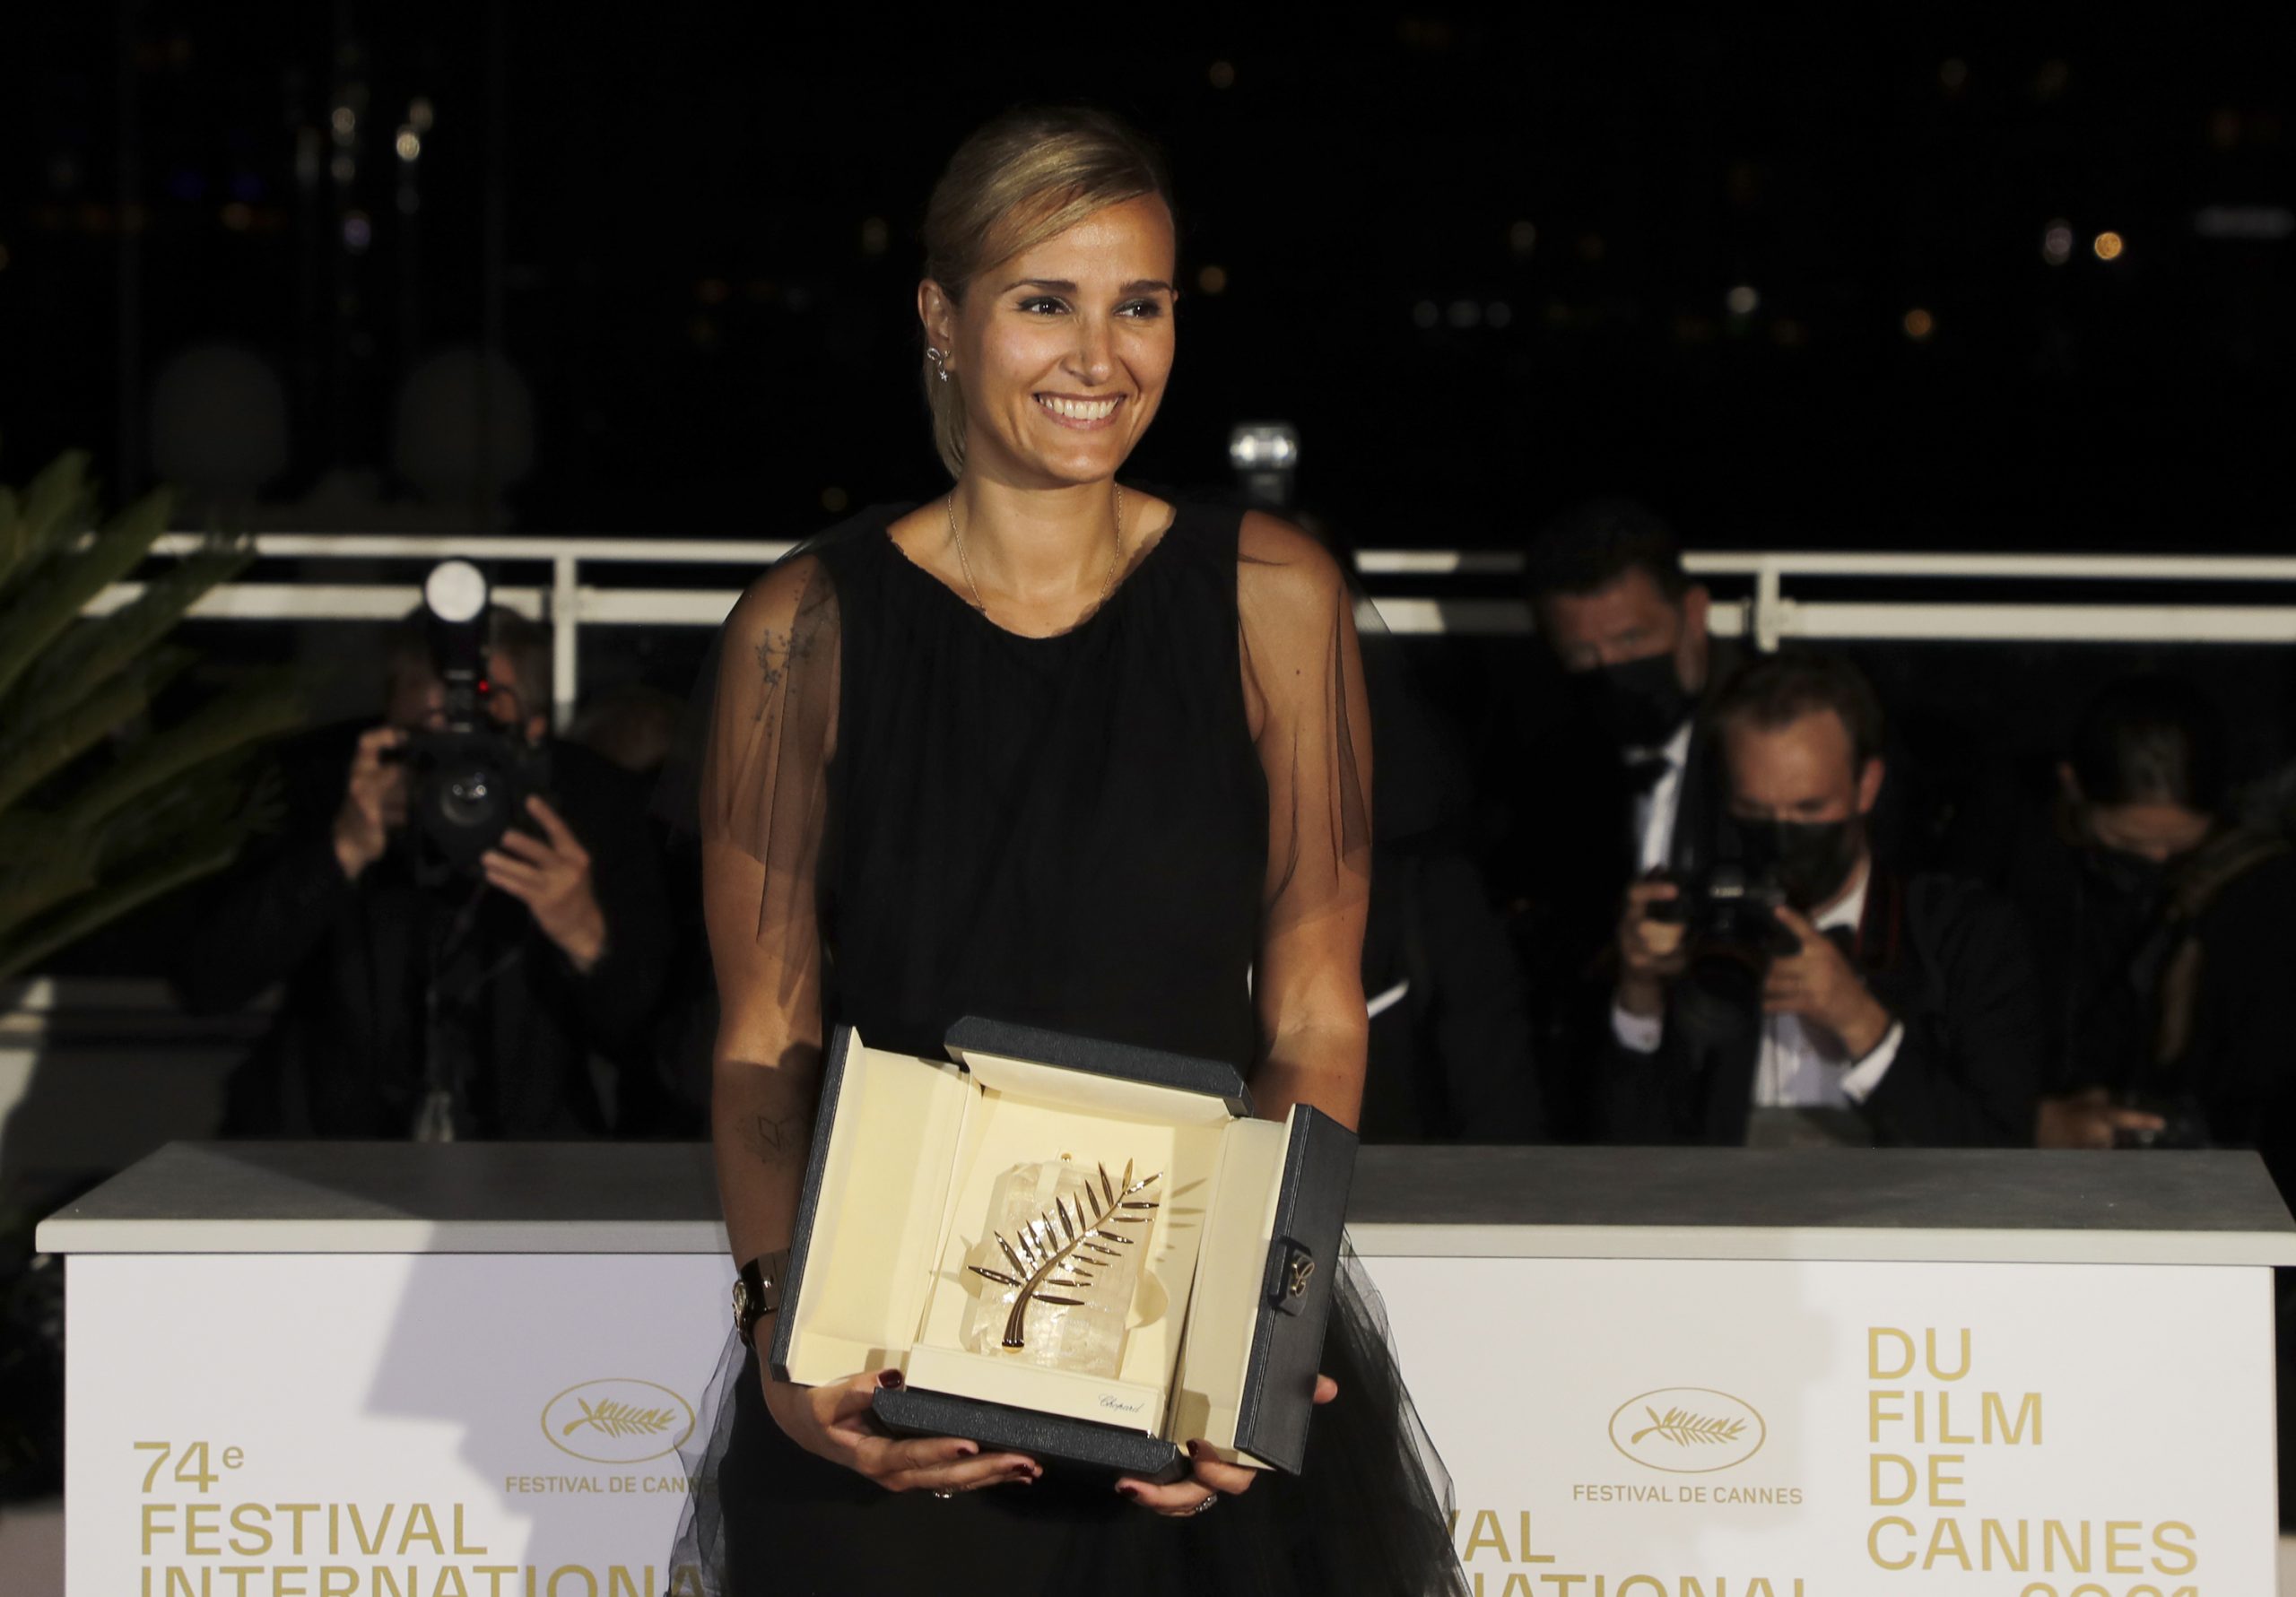 Cannes Film Festival: Winners Announced